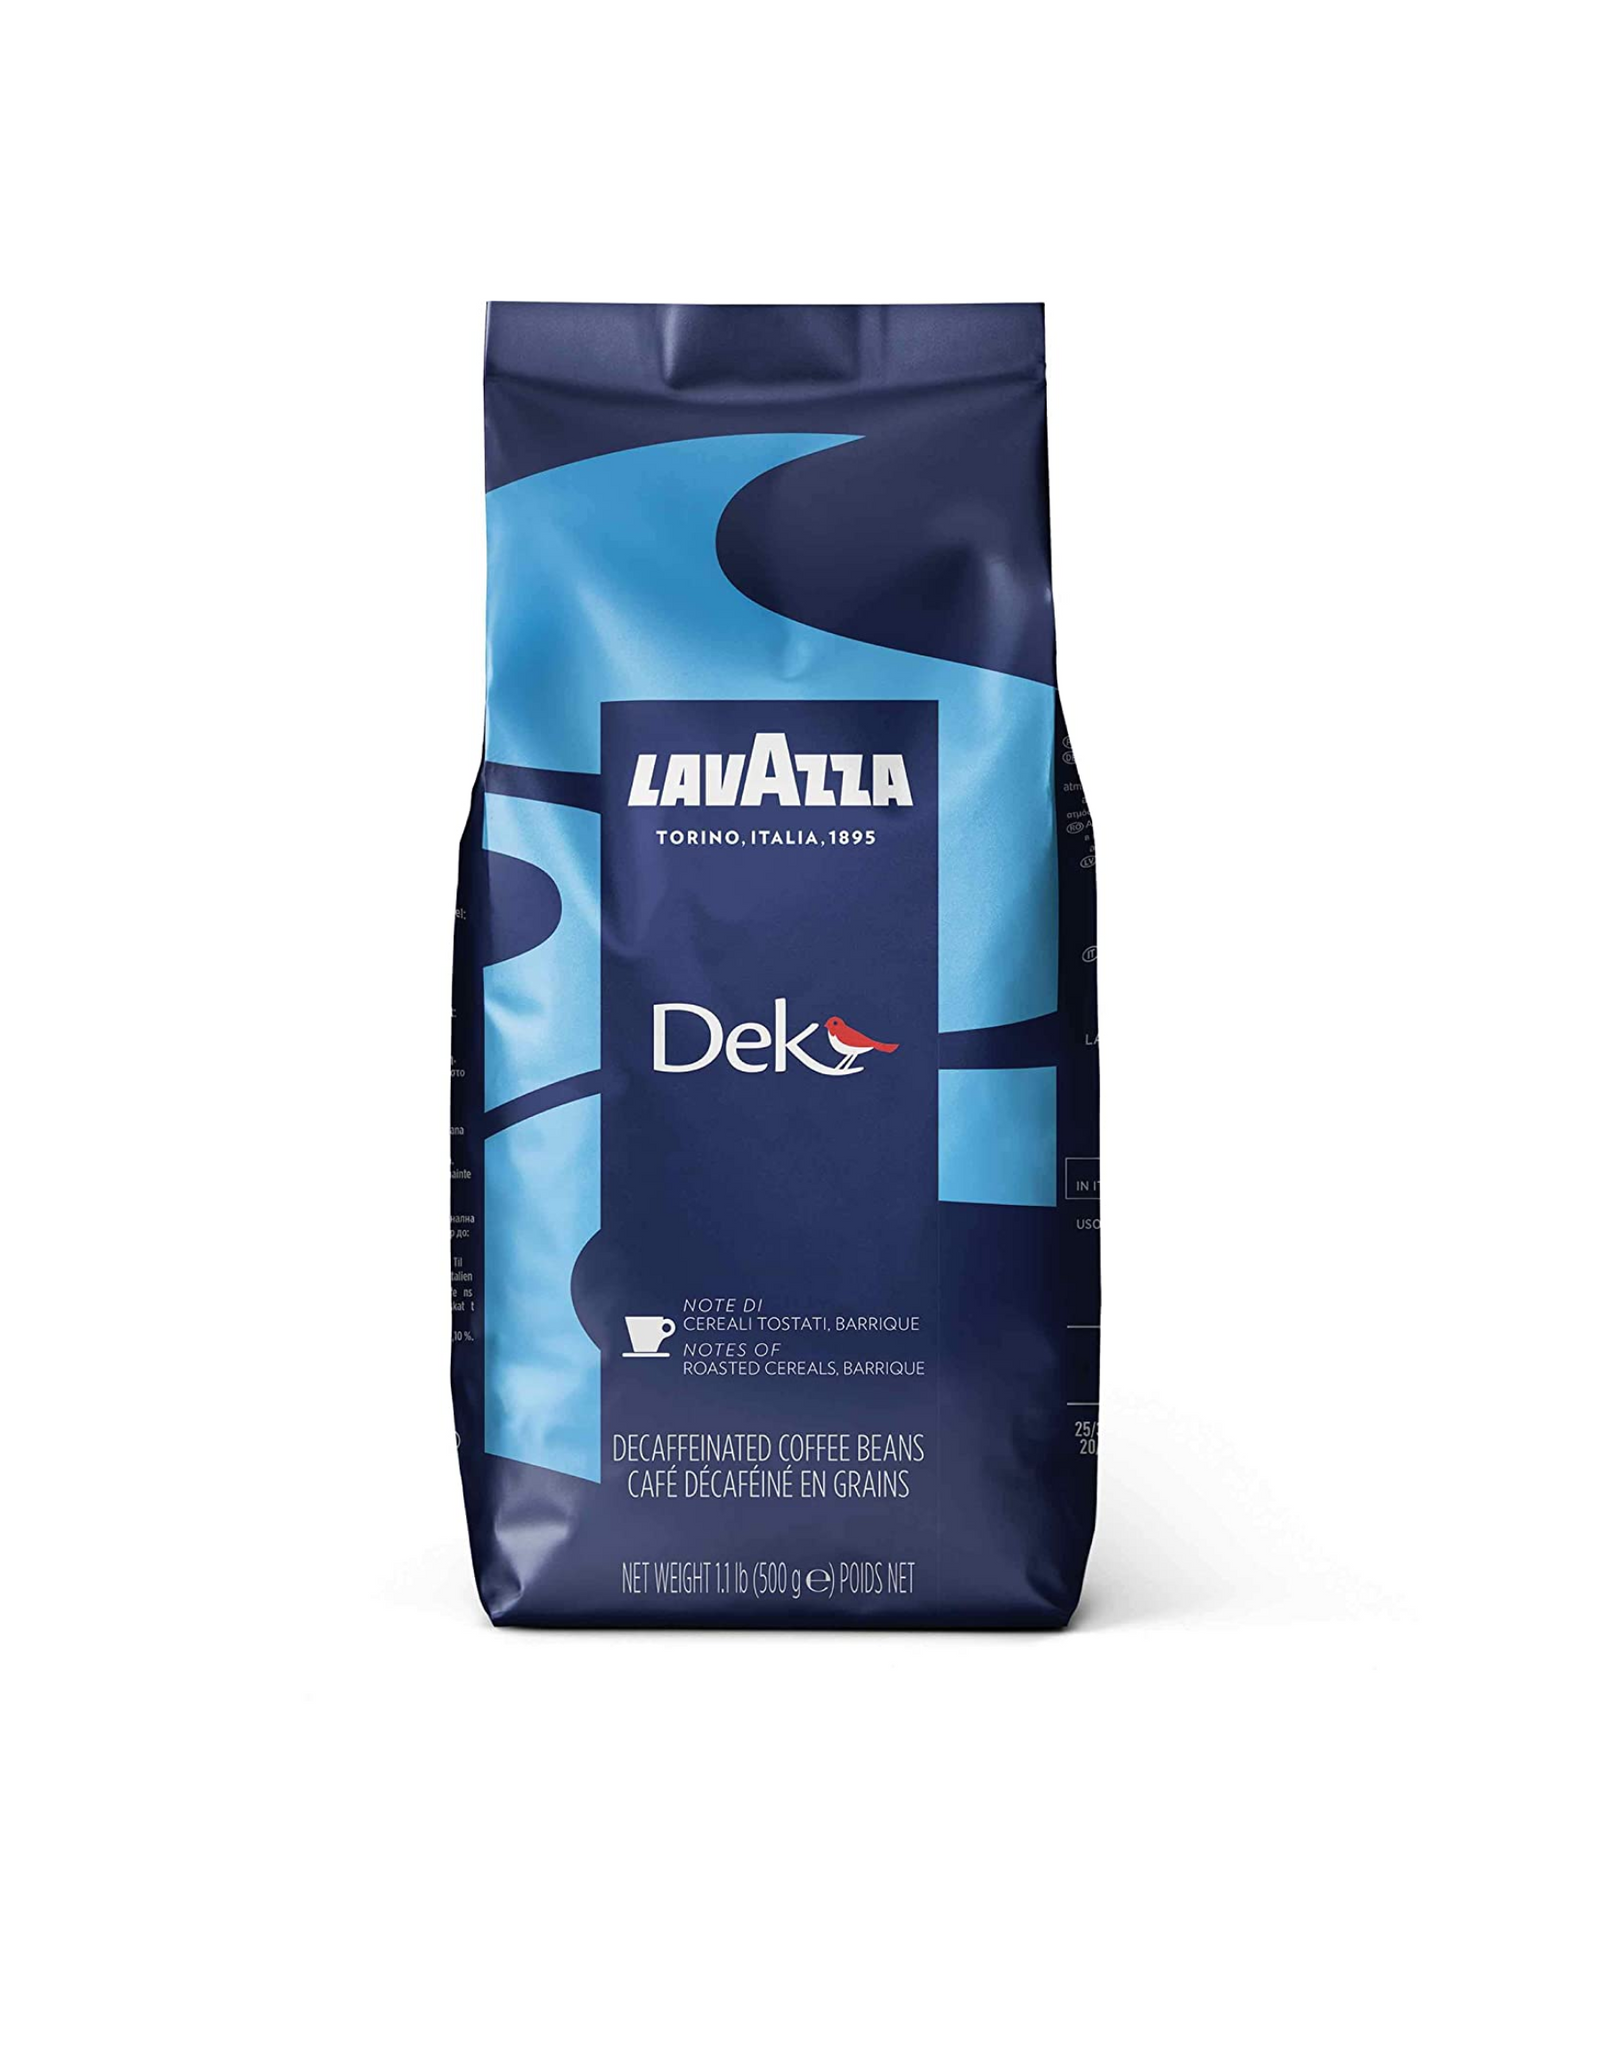 Lavazza Dek Whole Bean Coffee Blend, Dark Espresso Roast, Decaffeinated, 1.1 lb. (500g)